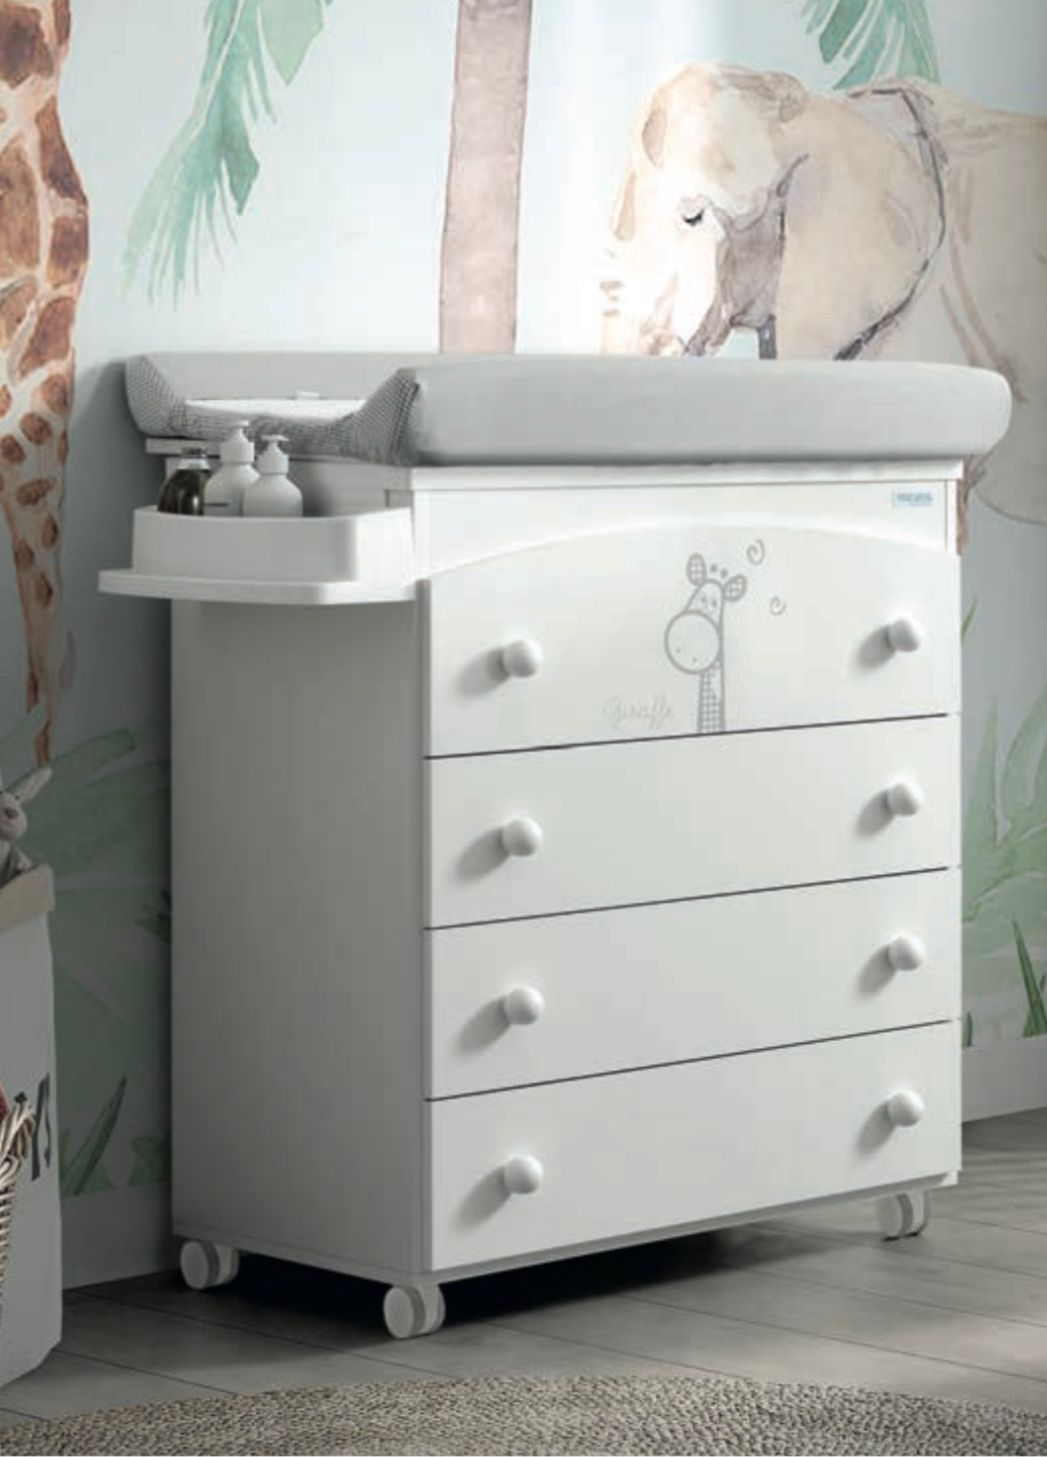 Muebles bañera cambiador para bebés - Kidshome